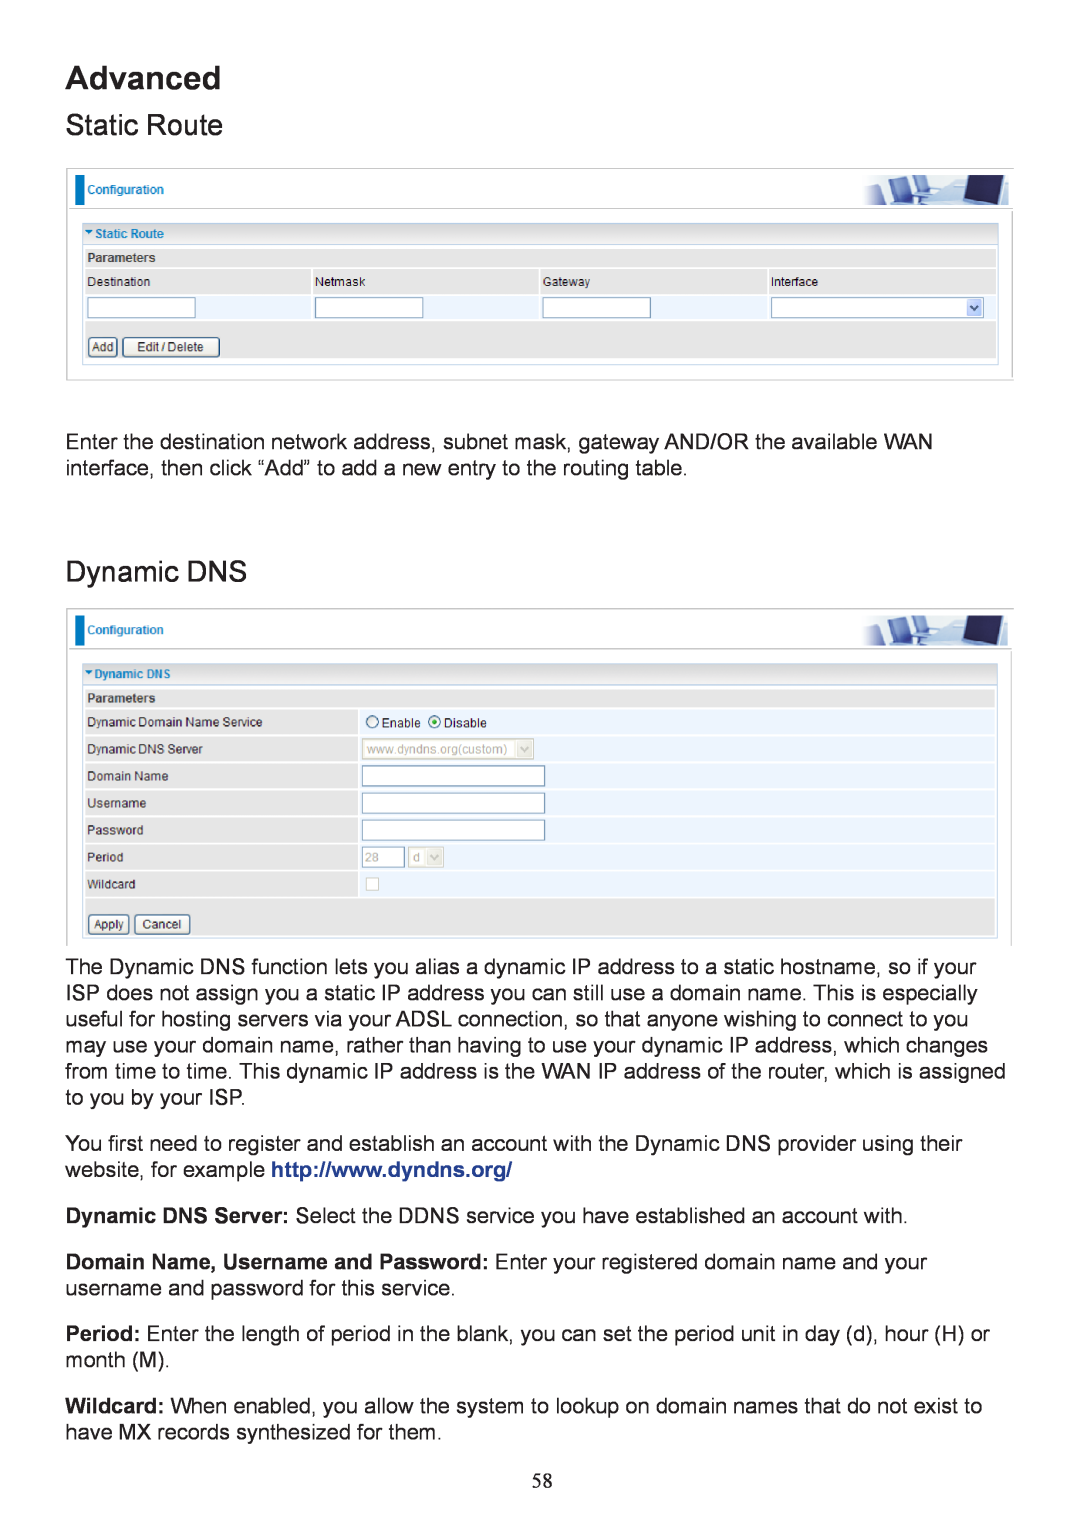 Billion Electric Company 7800 user manual Advanced, Static Route, Dynamic DNS 